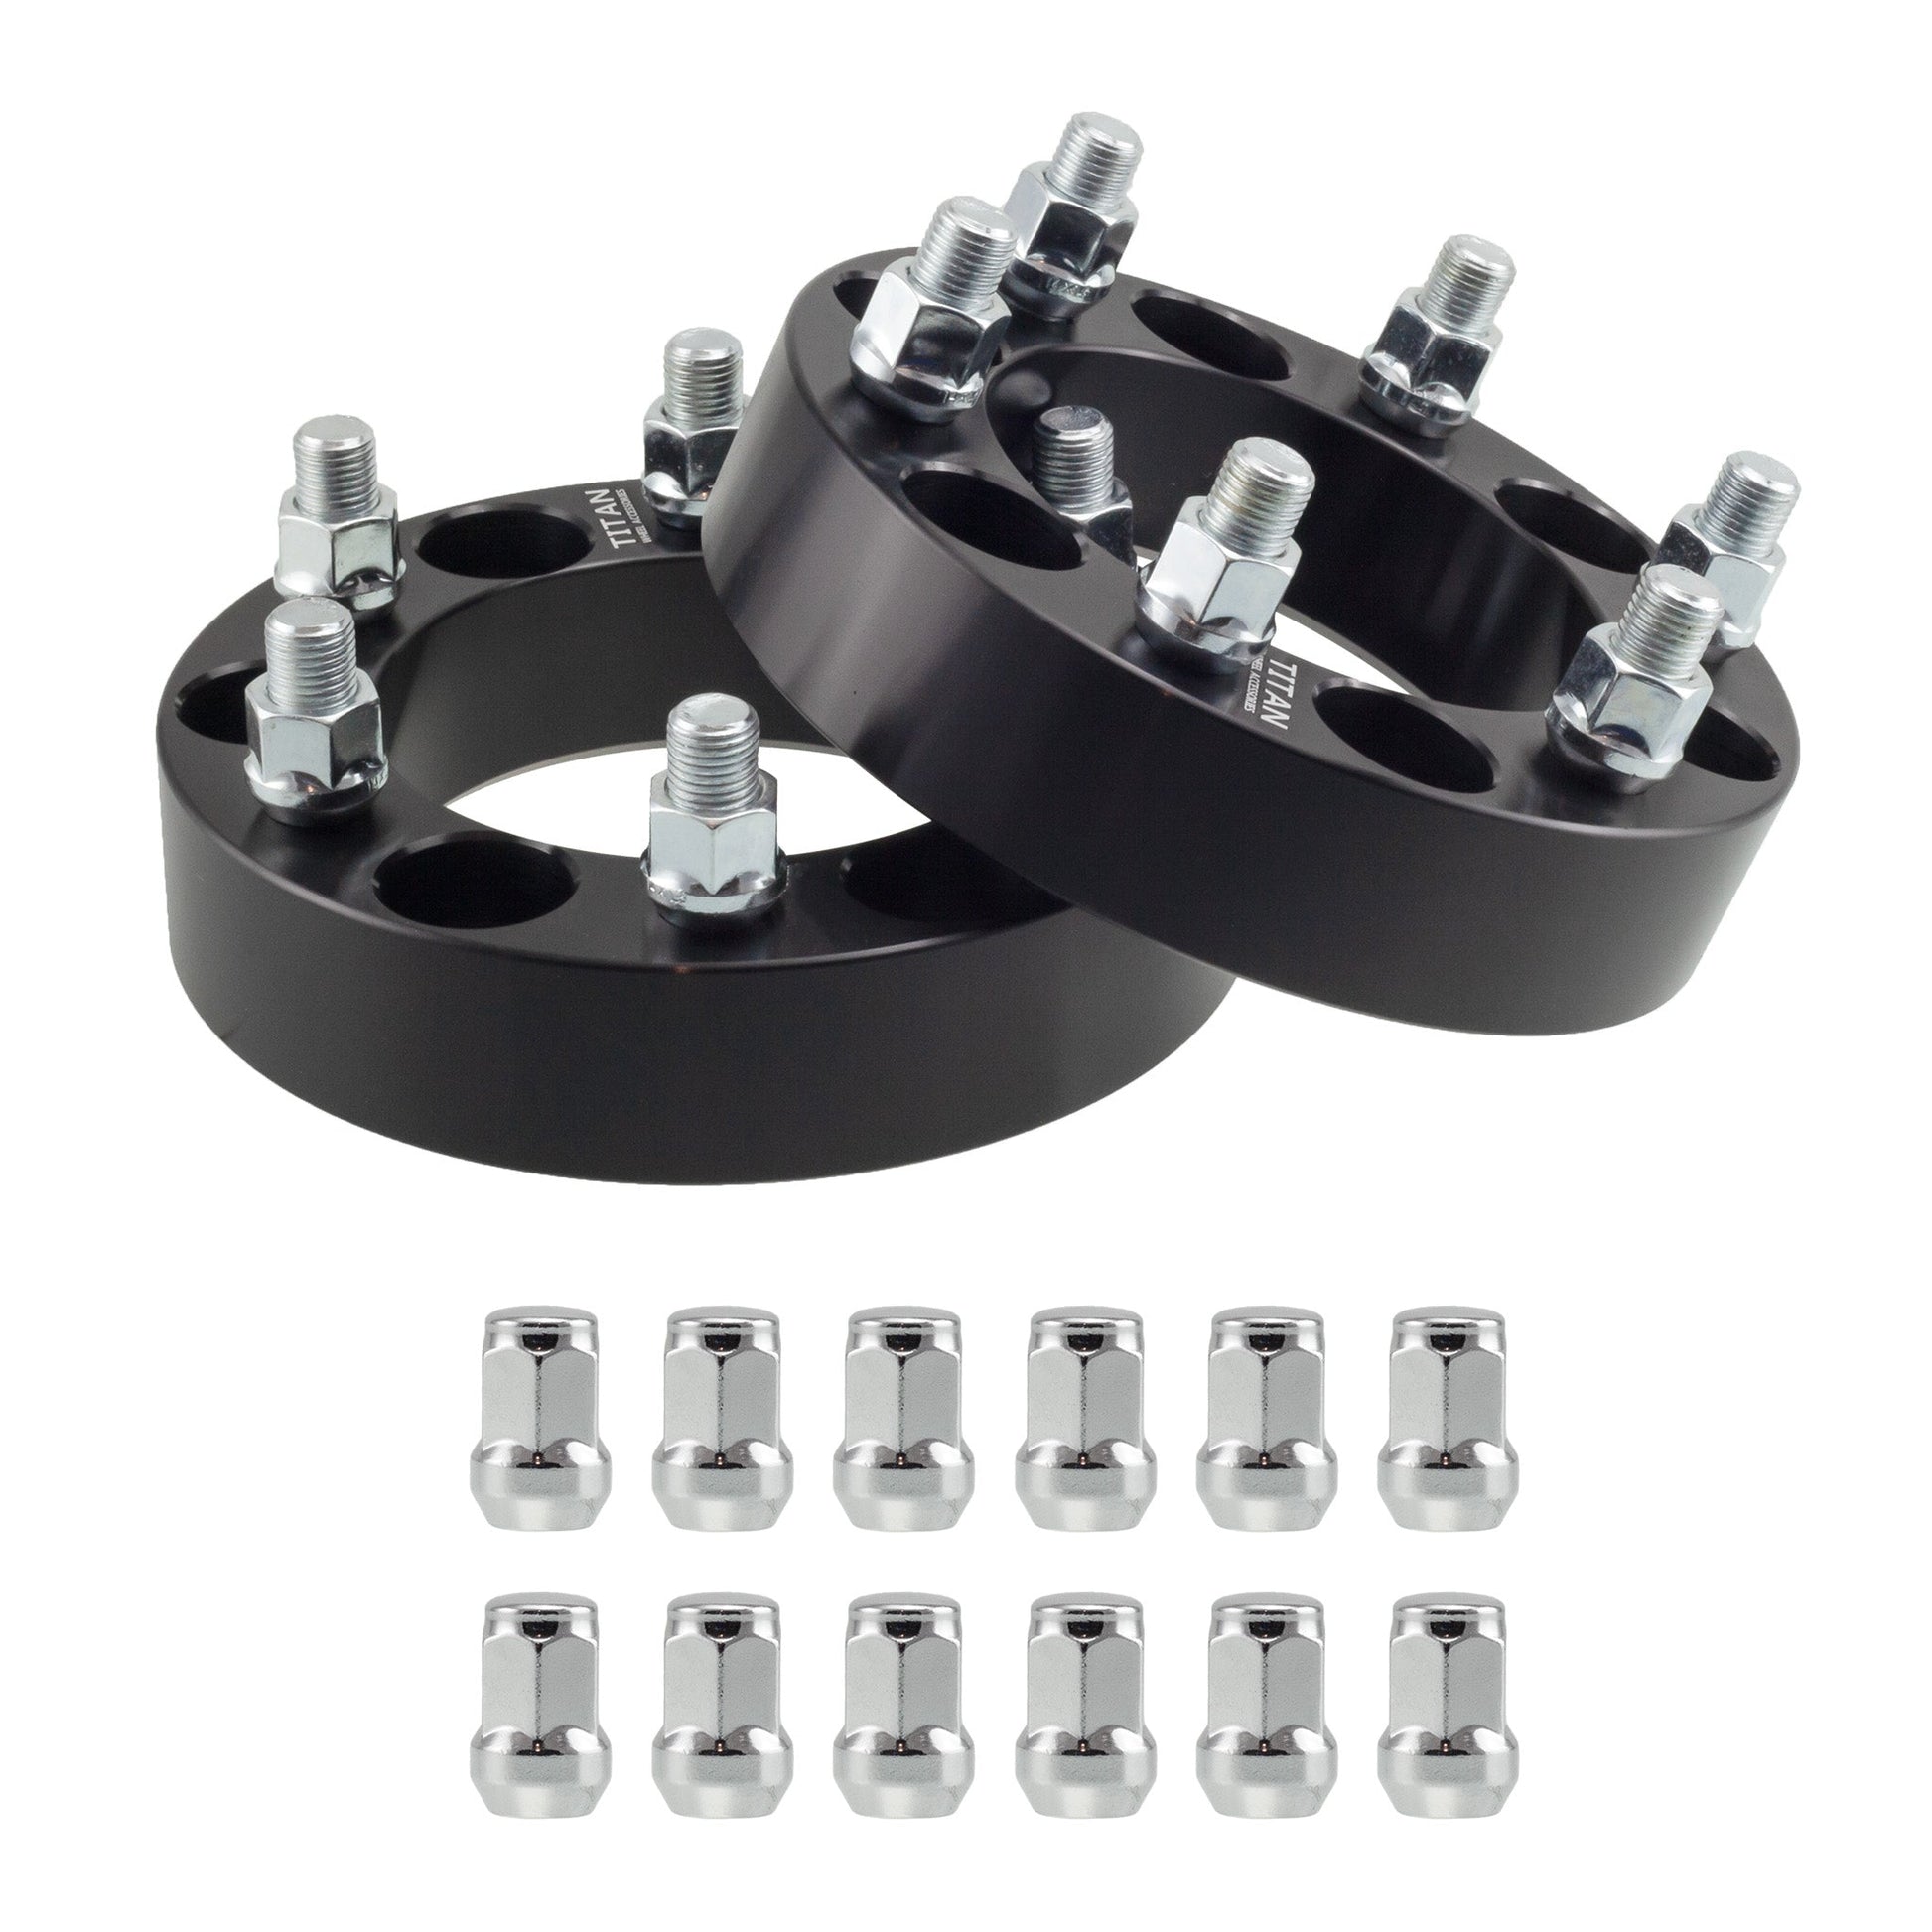 2" (50mm) Titan Wheel Spacers for Nissan Frontier Pathfinder Xterra | 6x114.3 (6x4.5) | 66.1 Hubcentric |12x1.25 Studs | Titan Wheel Accessories